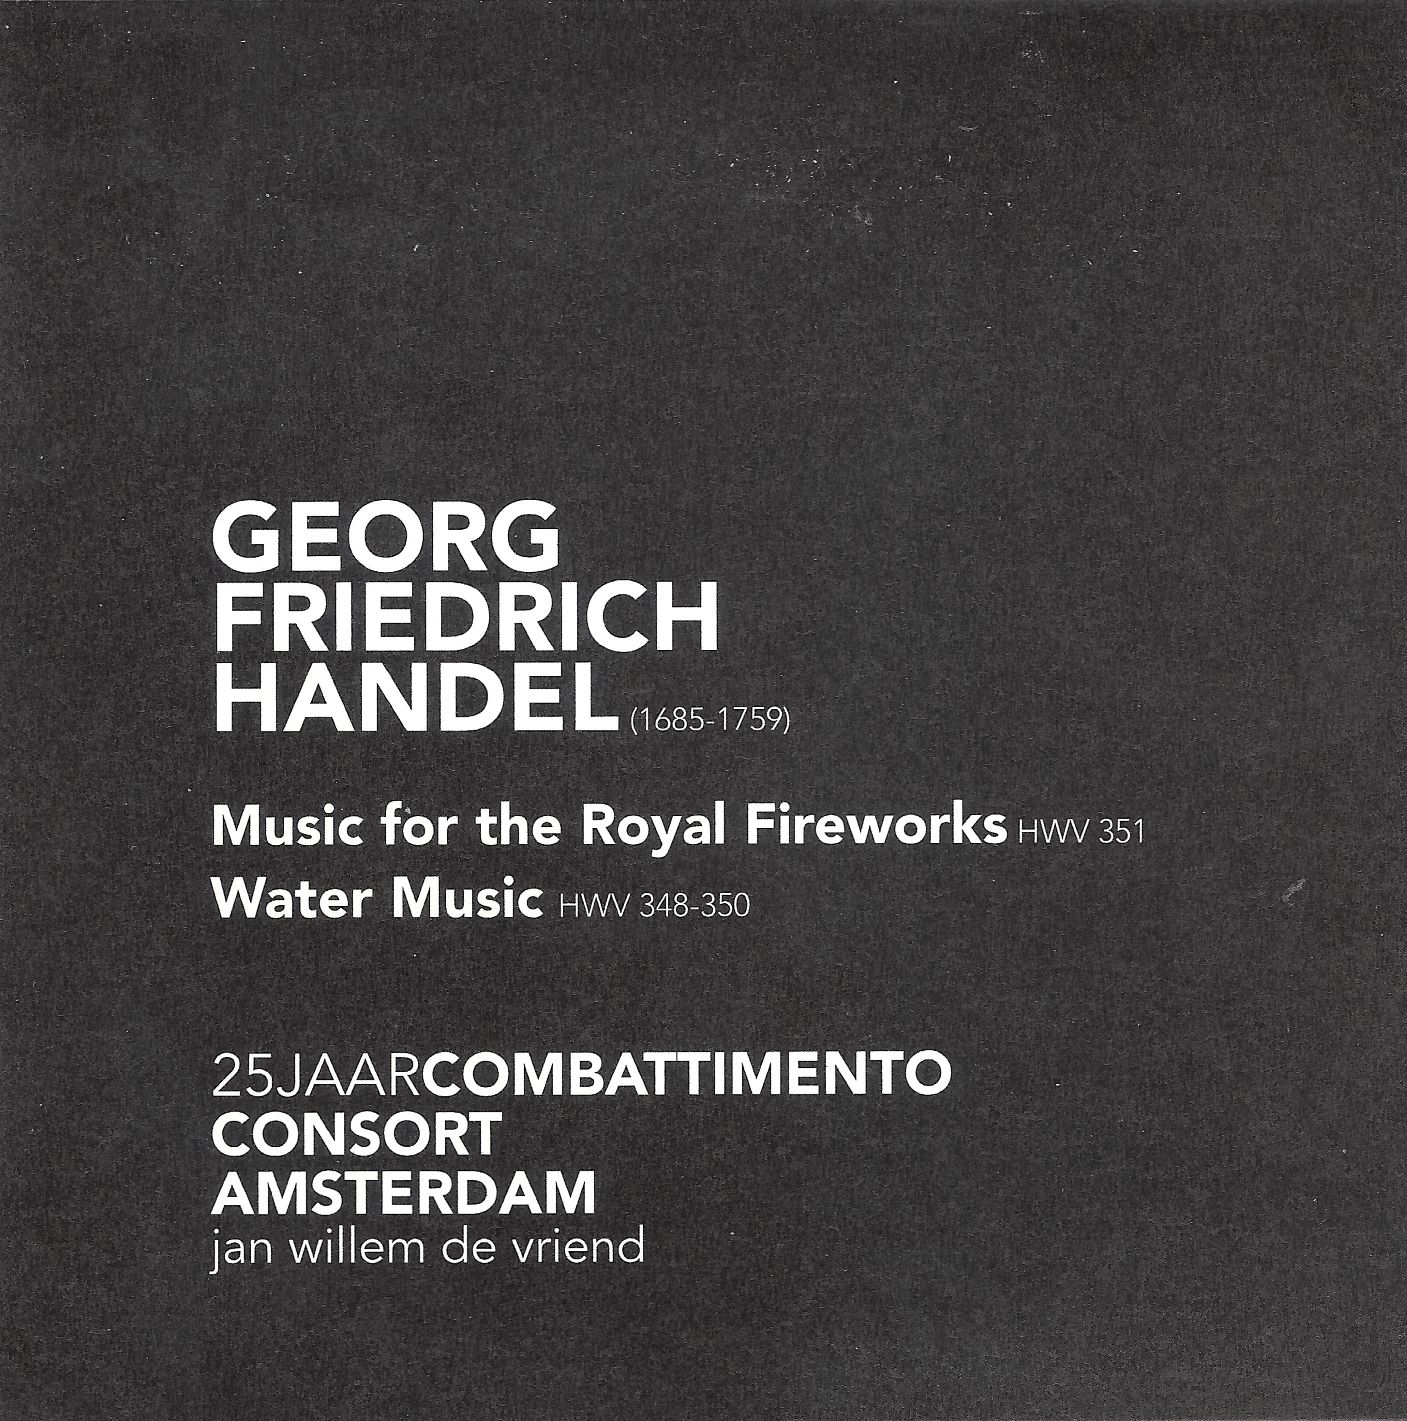 Handel - Watermusic & Fireworks - Combattimento Consort Amsterdam